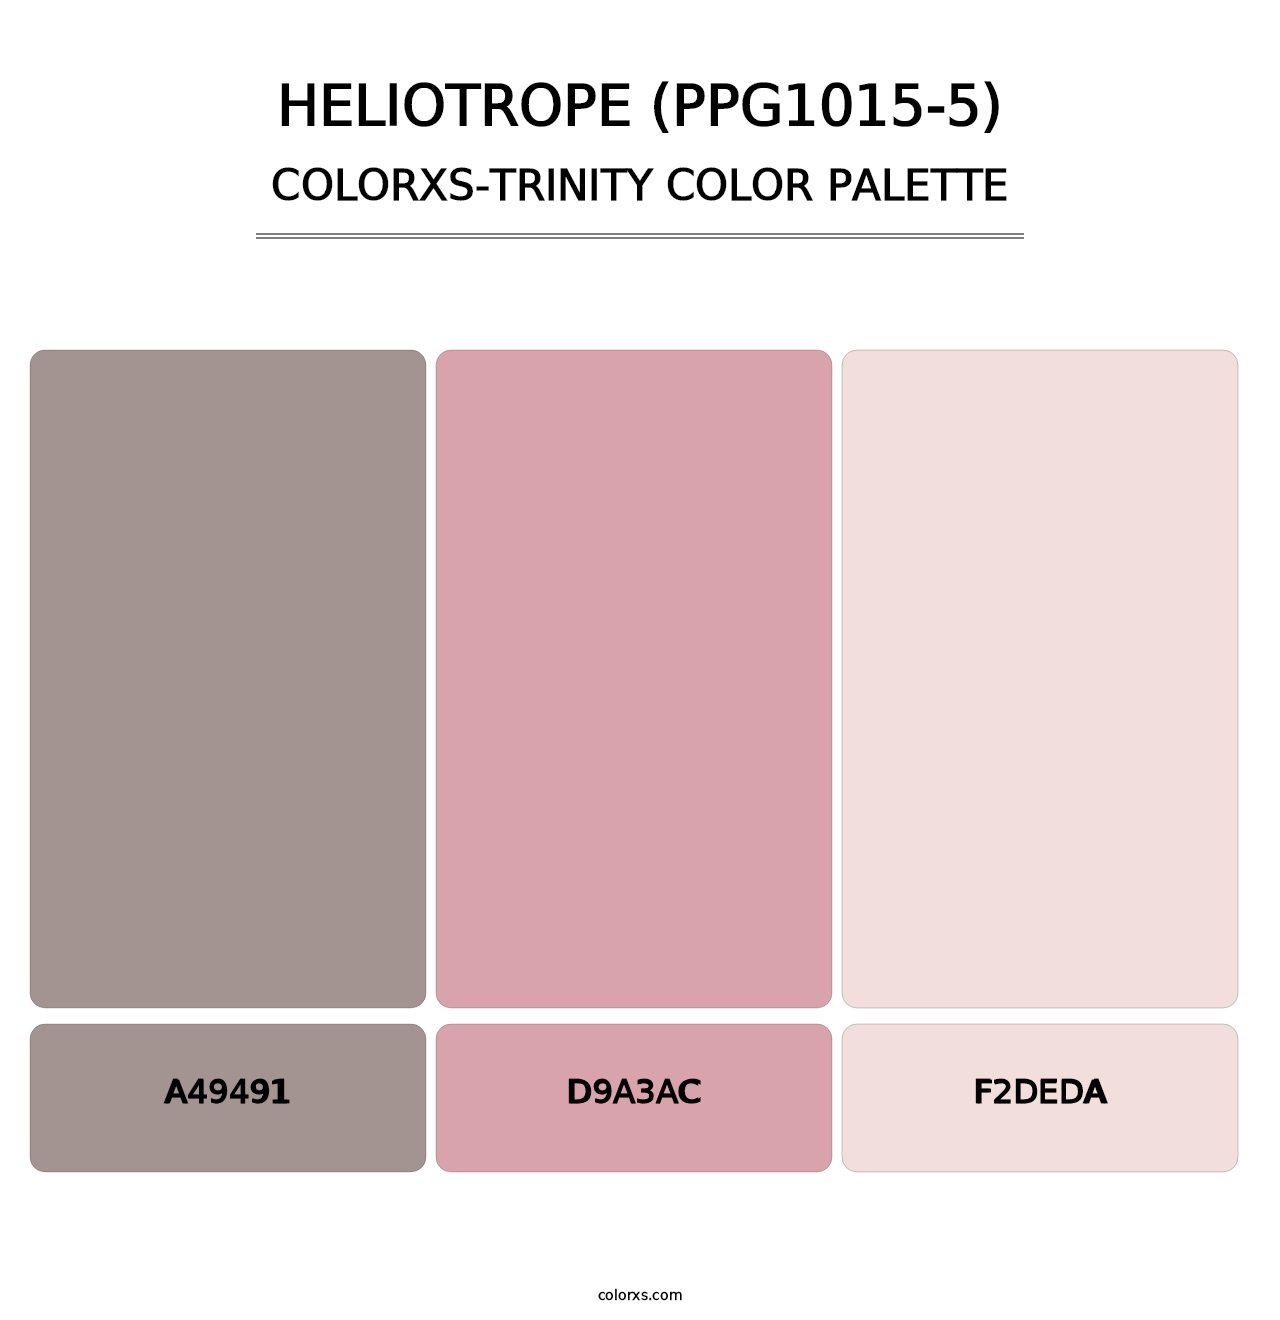 Heliotrope (PPG1015-5) - Colorxs Trinity Palette